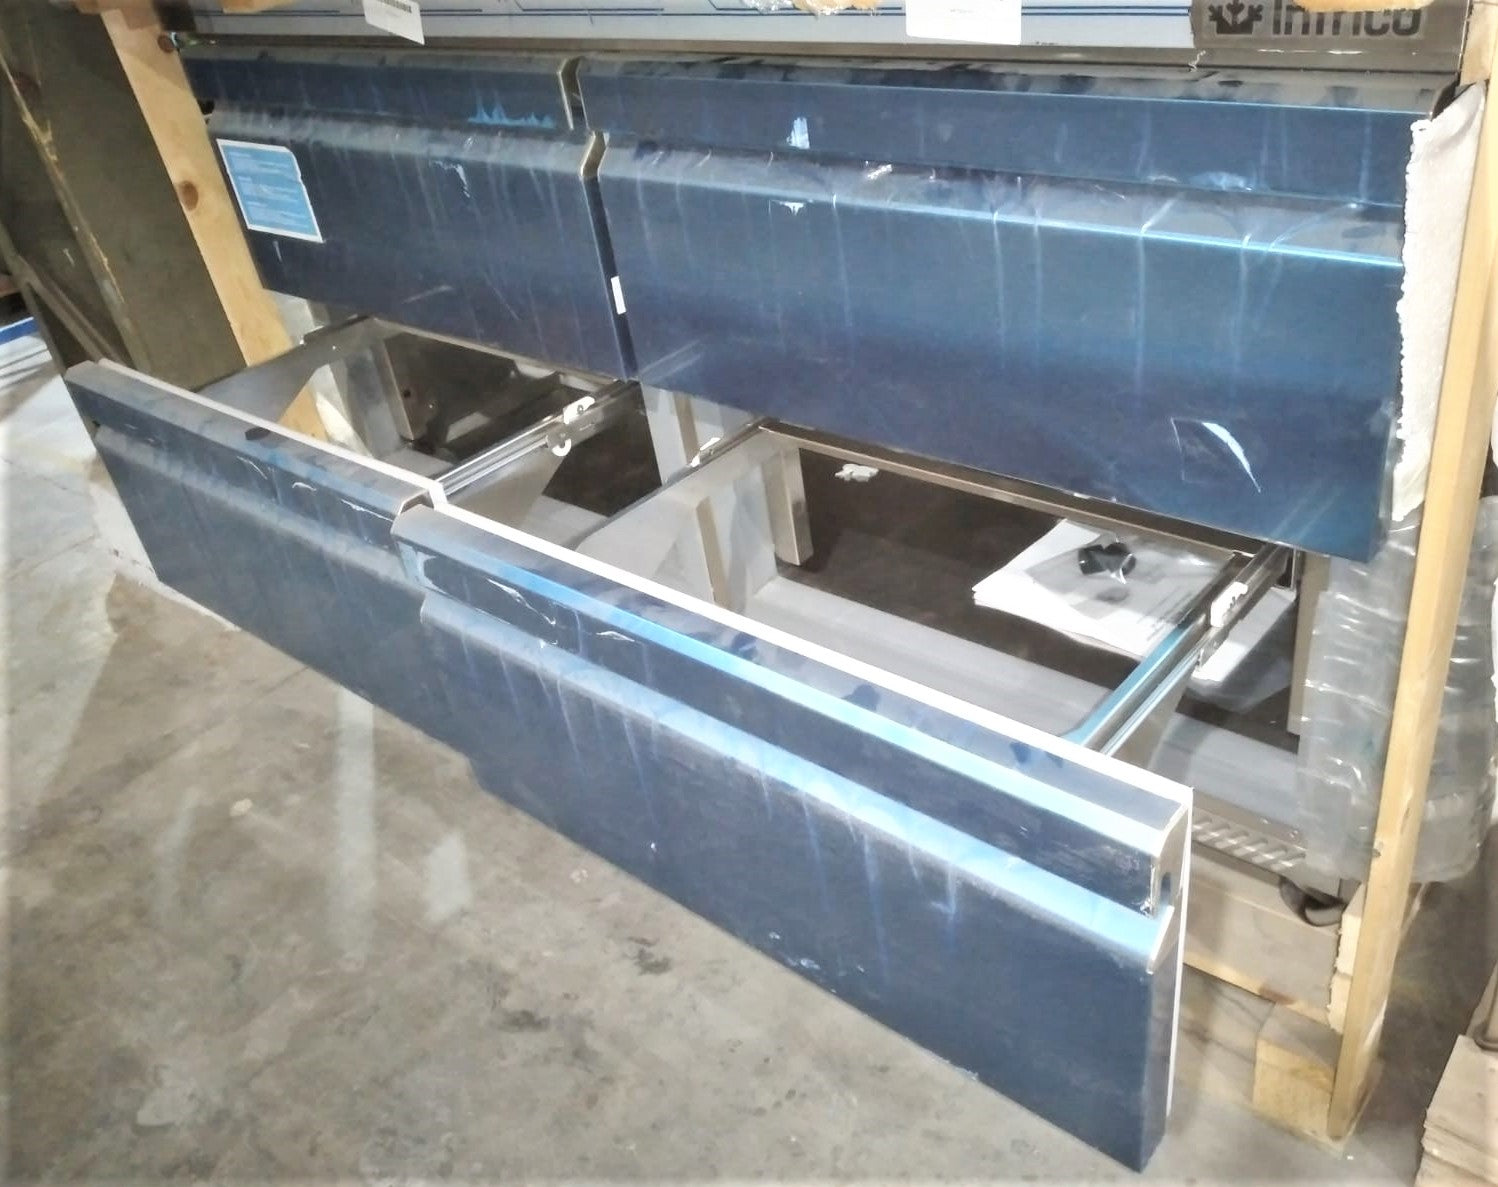 Mesa undercounter refrigeración con 4 cajones infrico uc604d [Openbox]